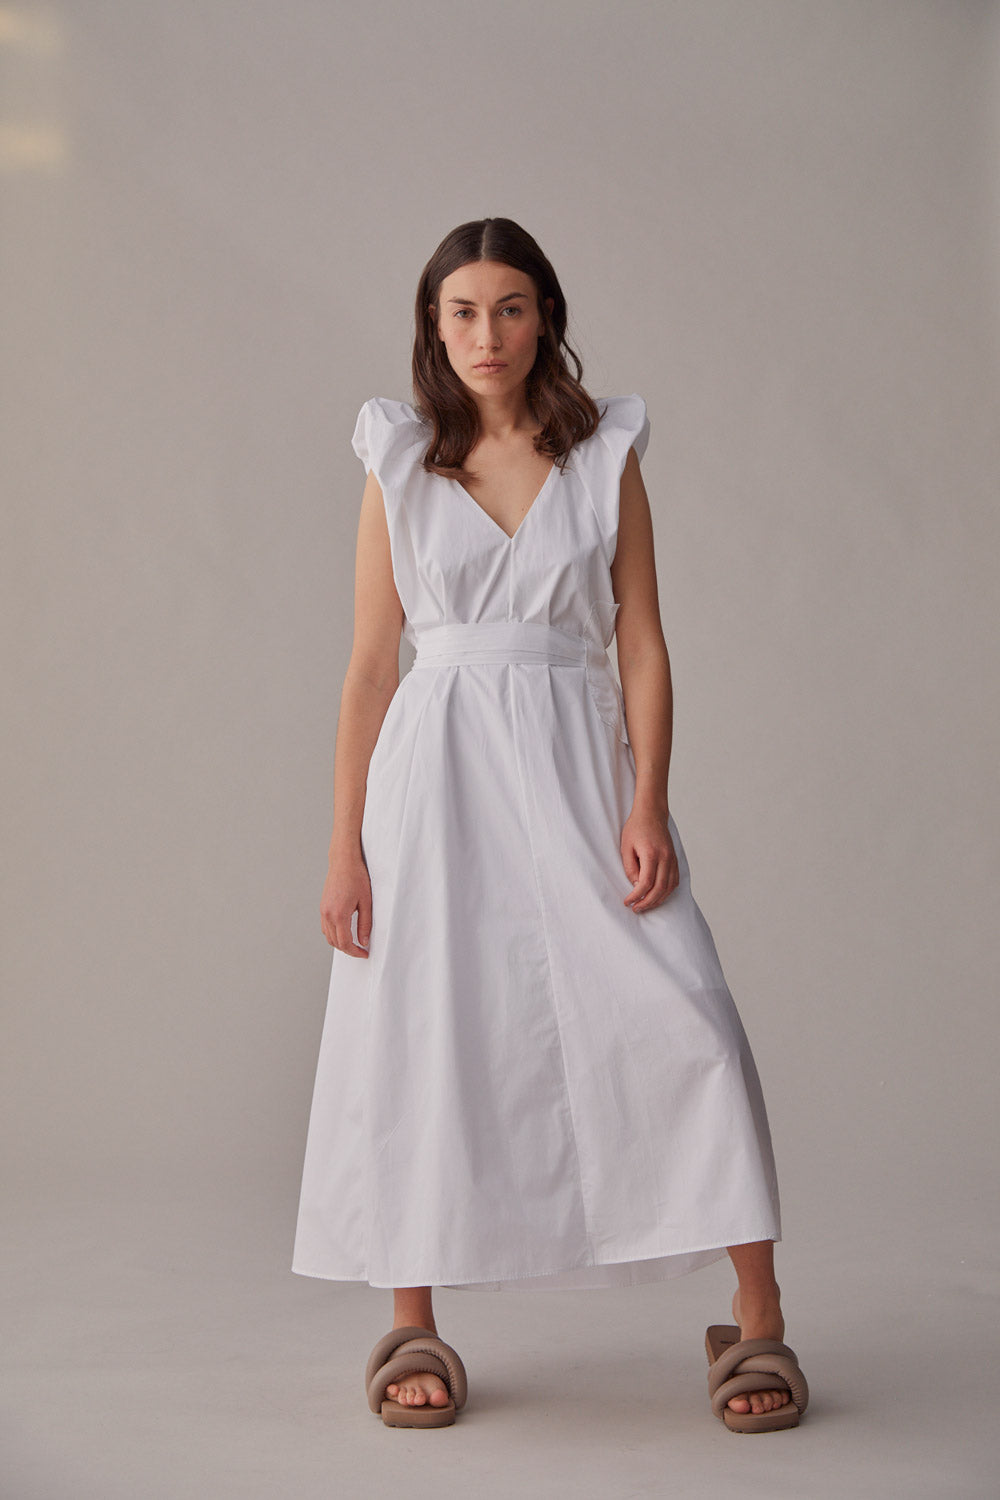 The White Dress 02